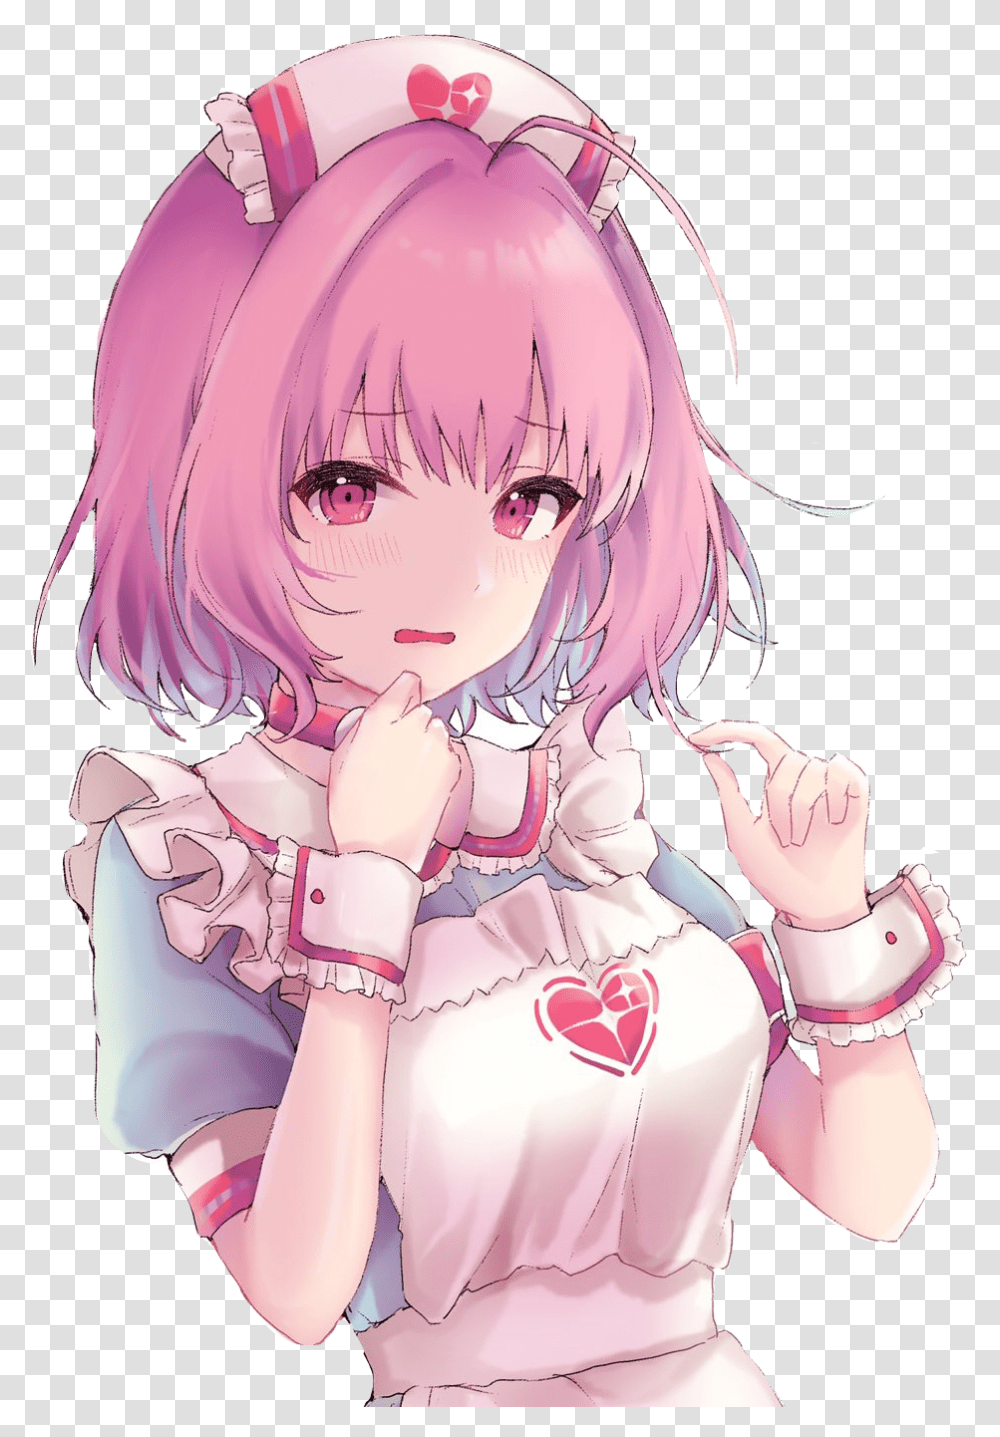 Nurse Anime Animegirl Animenurse Loveheart Pastel Pink Hair Nurse Anime Girl, Comics, Book, Manga, Helmet Transparent Png